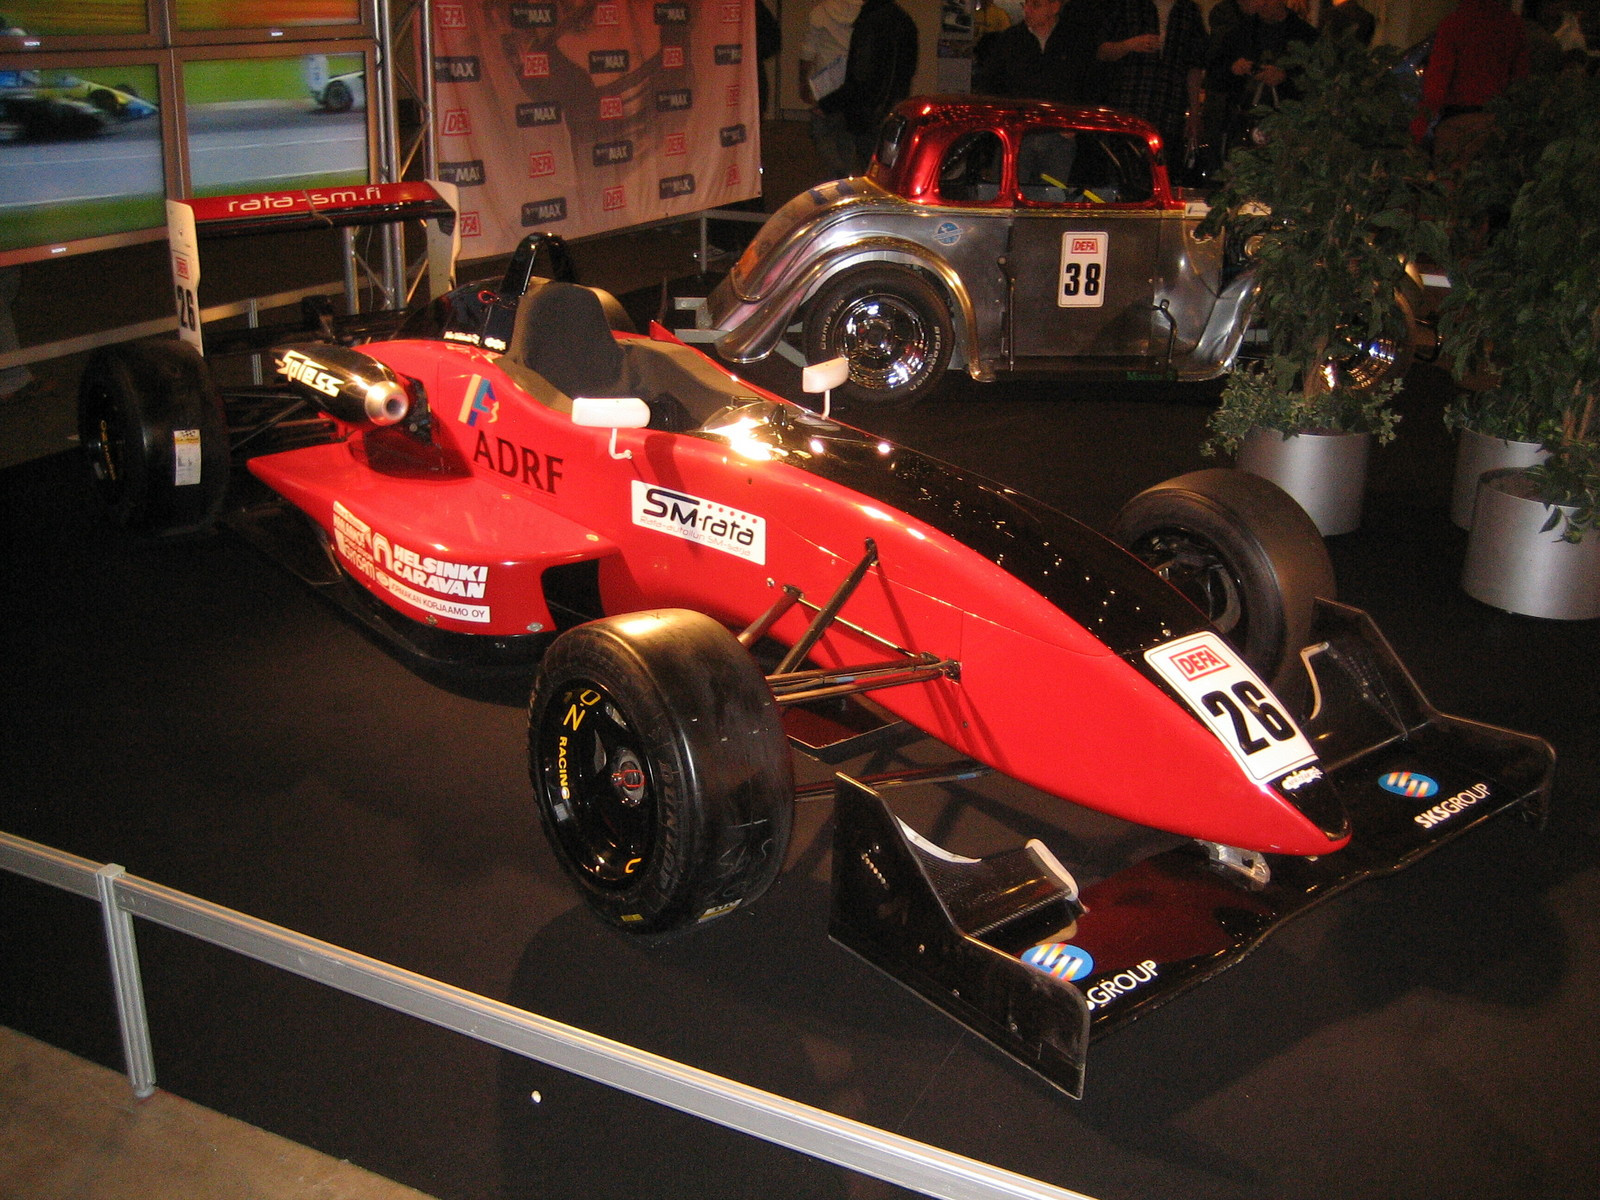 Helsinki motor show 2007, Punainen SM-rata formula